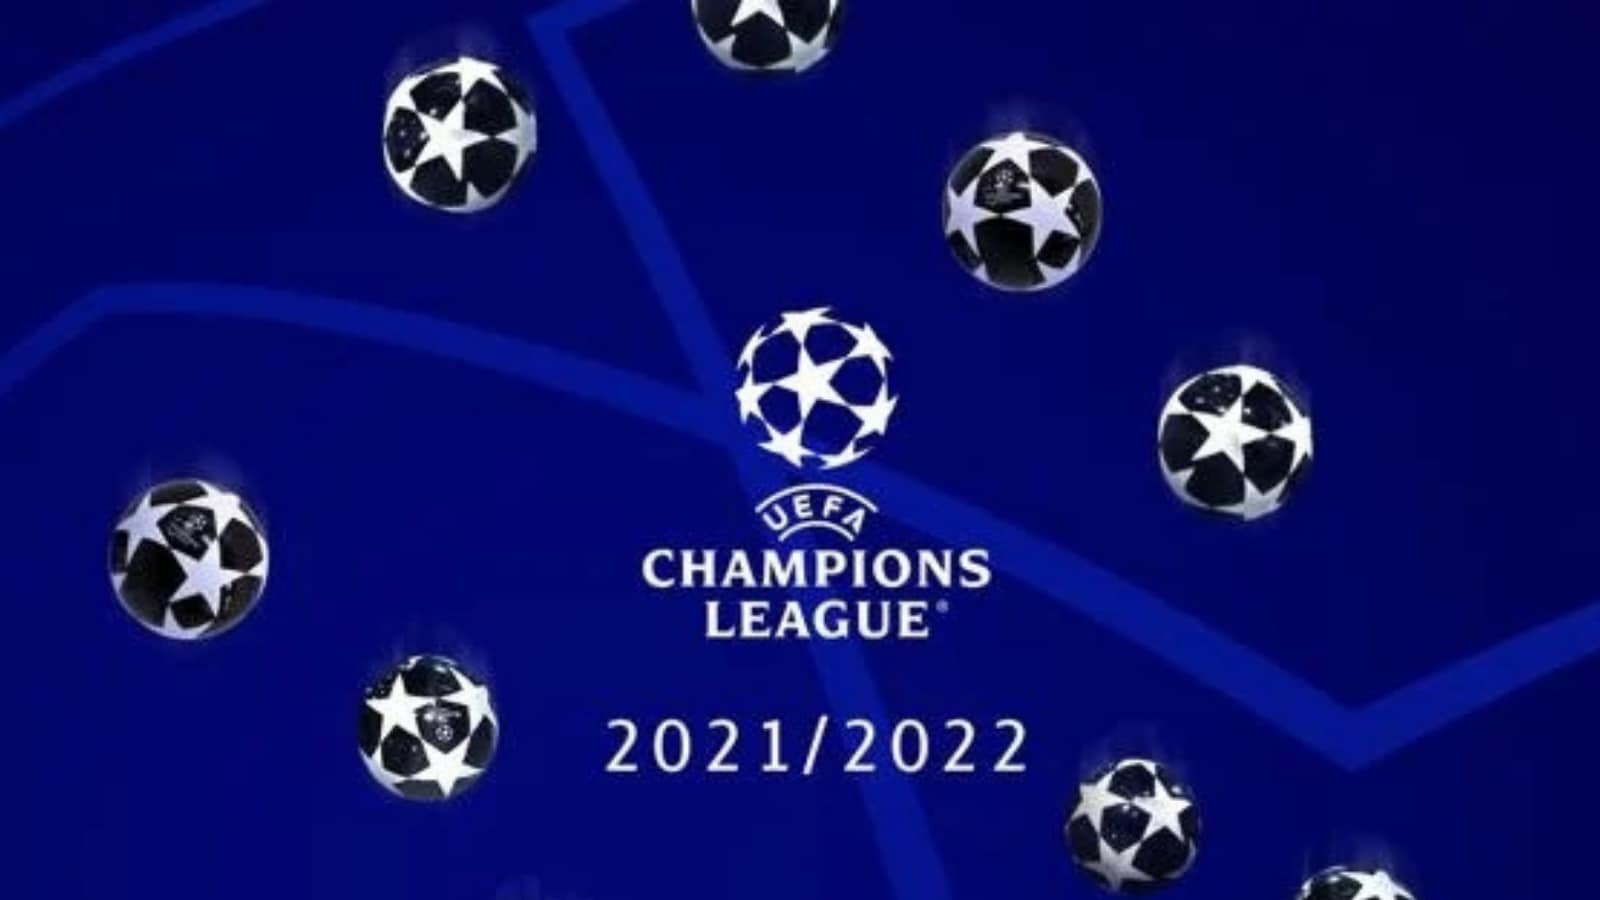 Champions league live stream. Лига чемпионов УЕФА 2021/2022. Лига чемпионов УЕФА 2021/2022 таблица. Группы ЛЧ 2021 2022. Чемпион лига чемпионов 2021 2022.